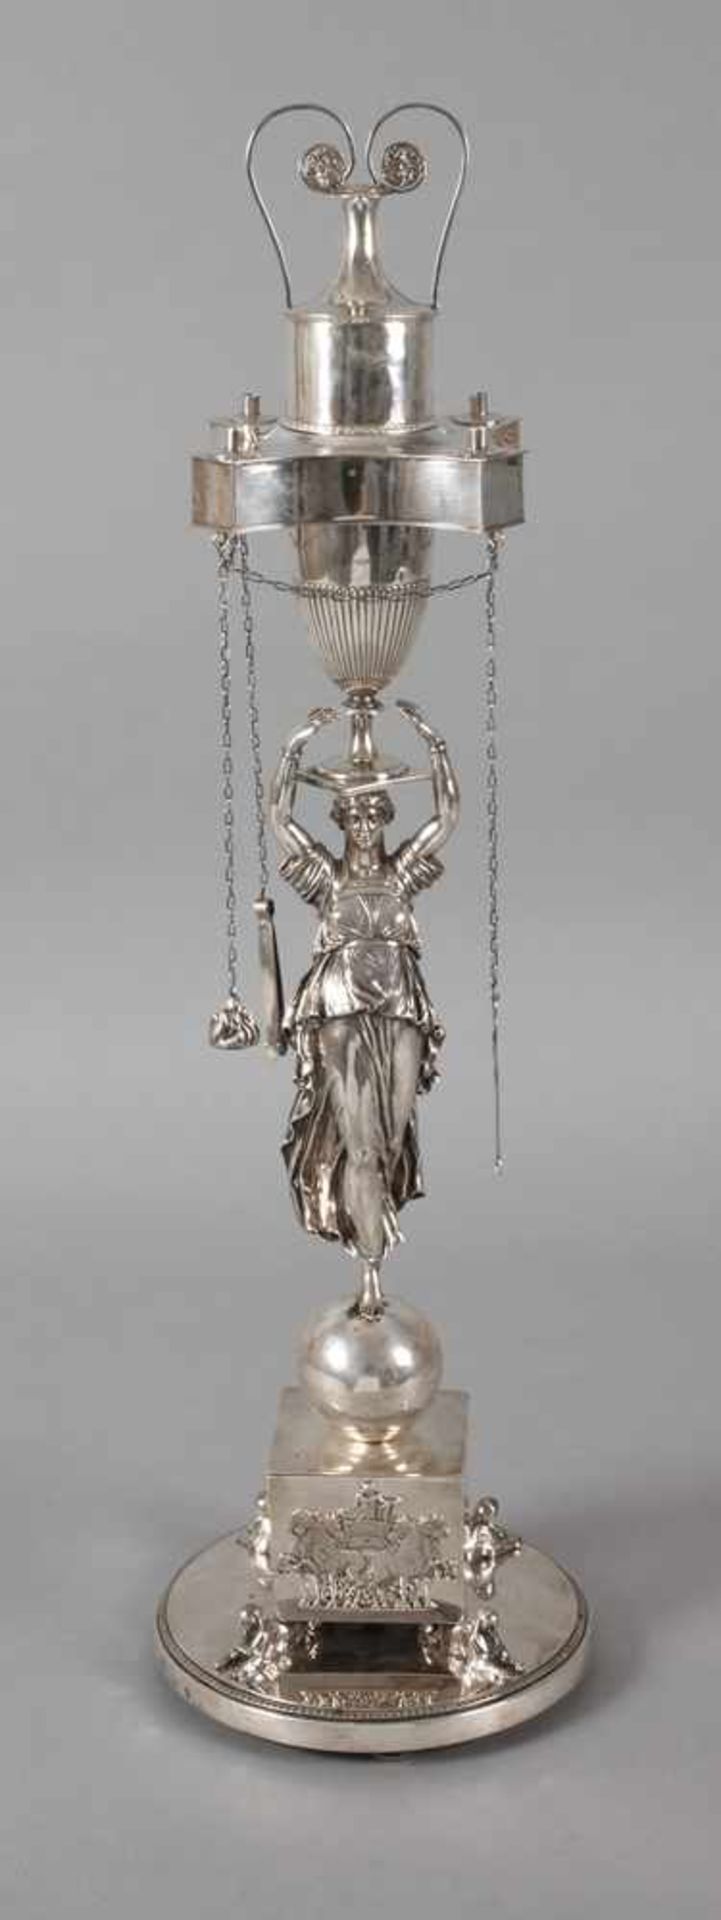 Silber Öllampe RomSilber große figürliche ÖllampeFrankreich, um 1809-1819, Feingehalt 800/1000,